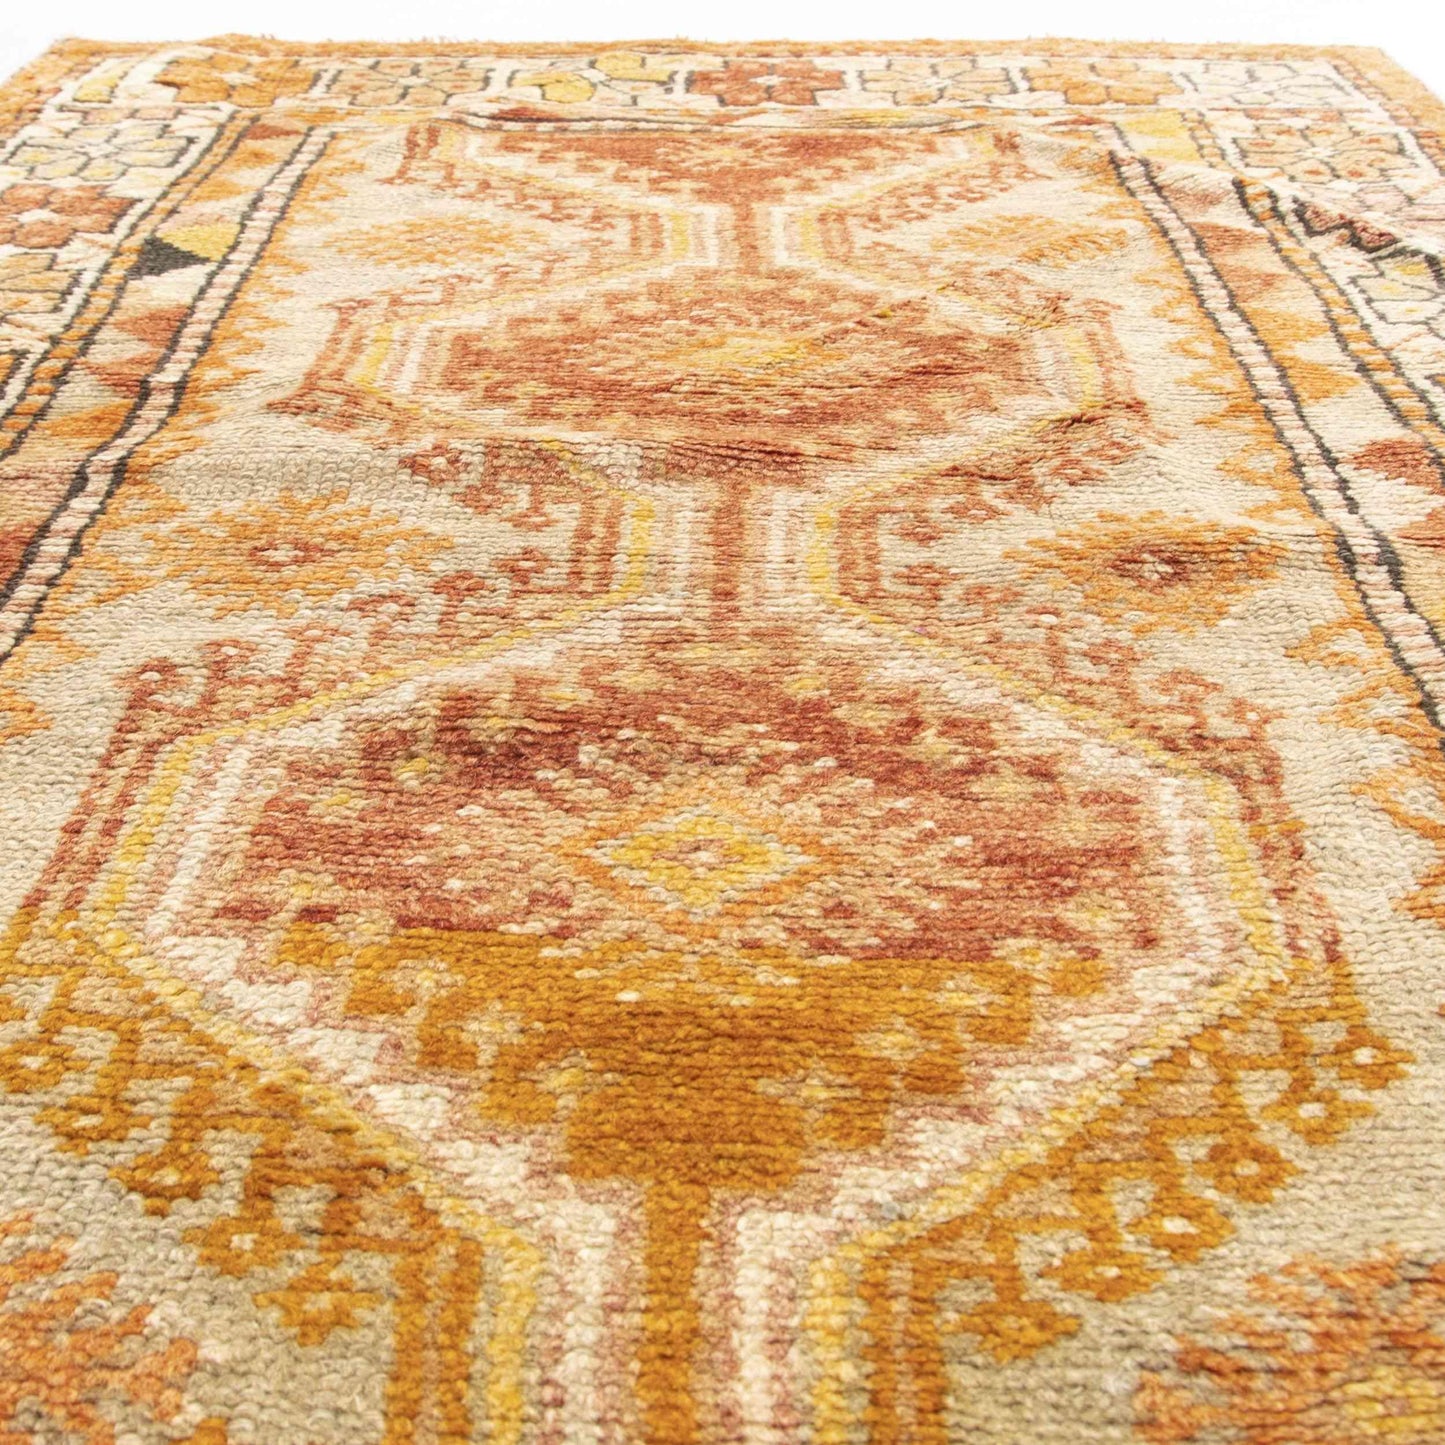 Oriental Rug Anatolian Handwoven Wool On Wool 78 x 158 Cm - 2' 7'' x 5' 3'' Orange C011 ER01